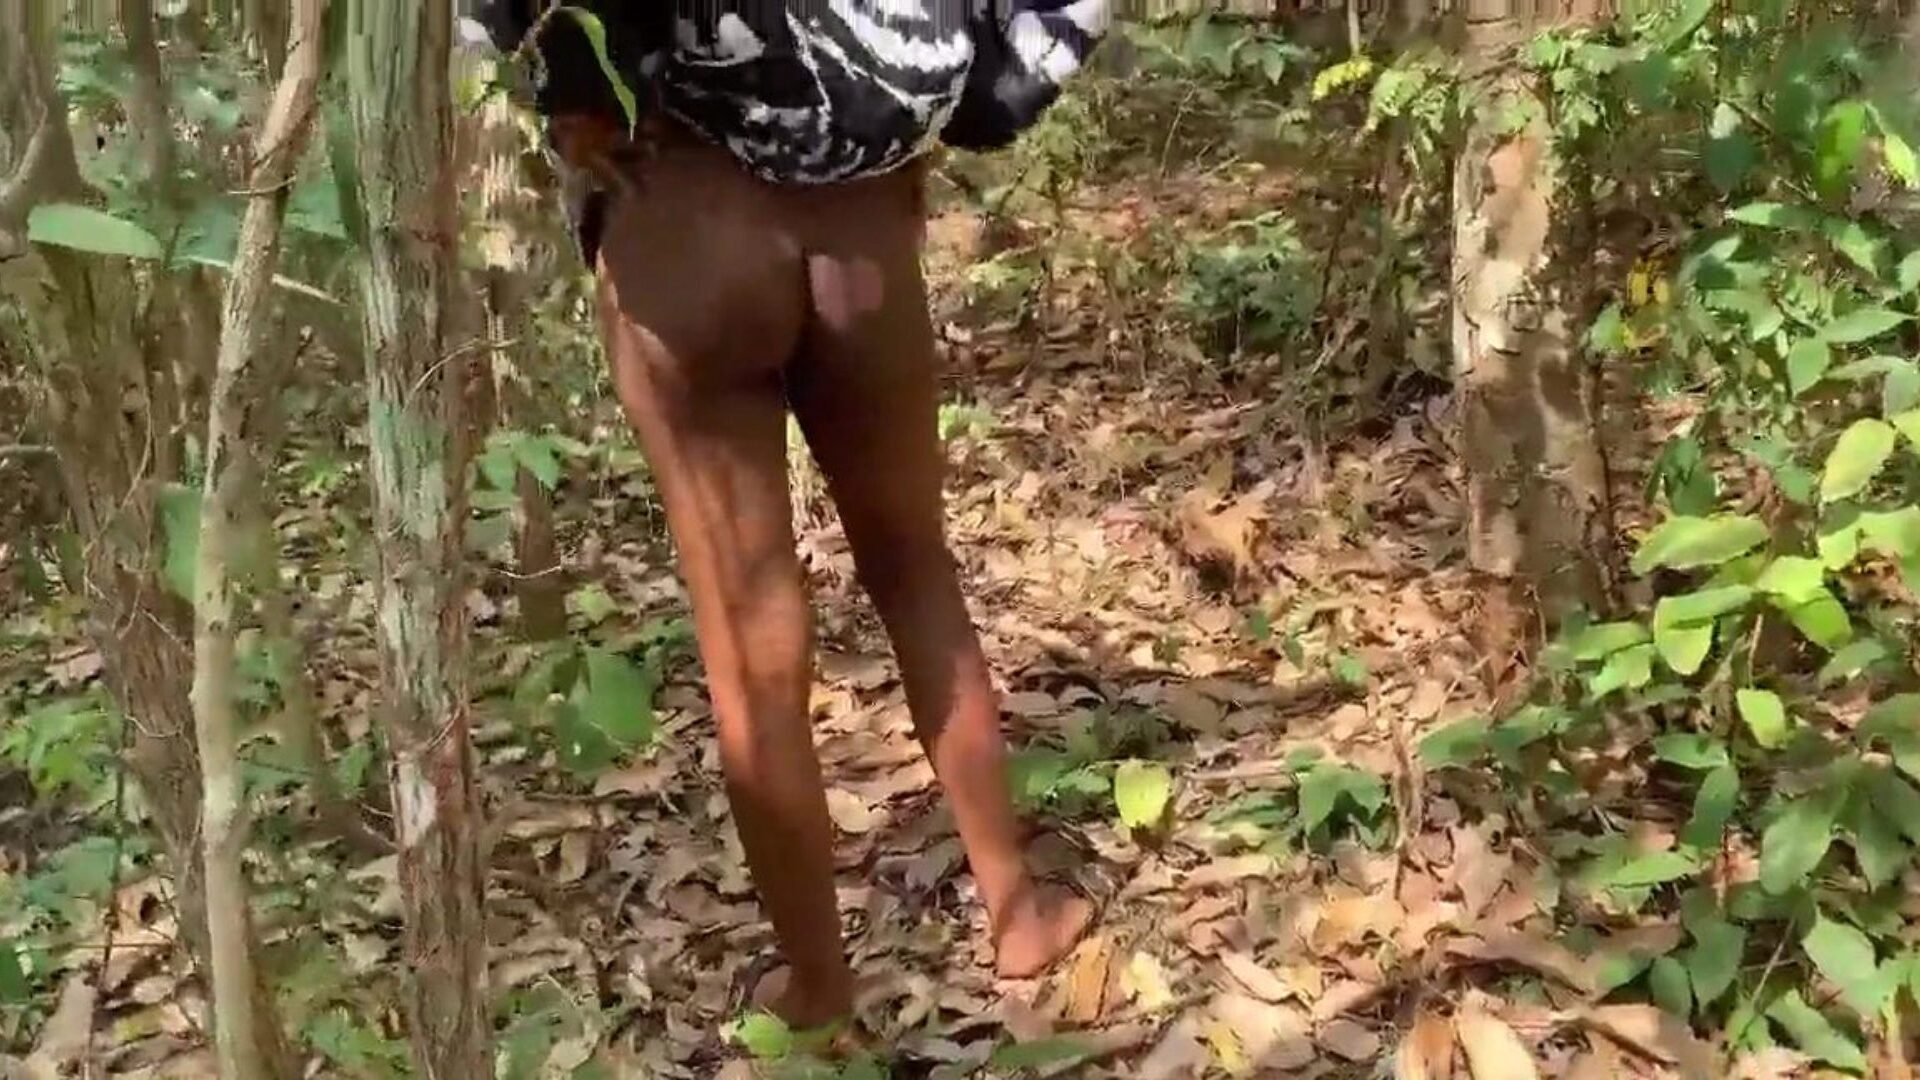 universitetslærer knepper sin studerende i bushen for at give hendes bestået karakter i sine eksamener